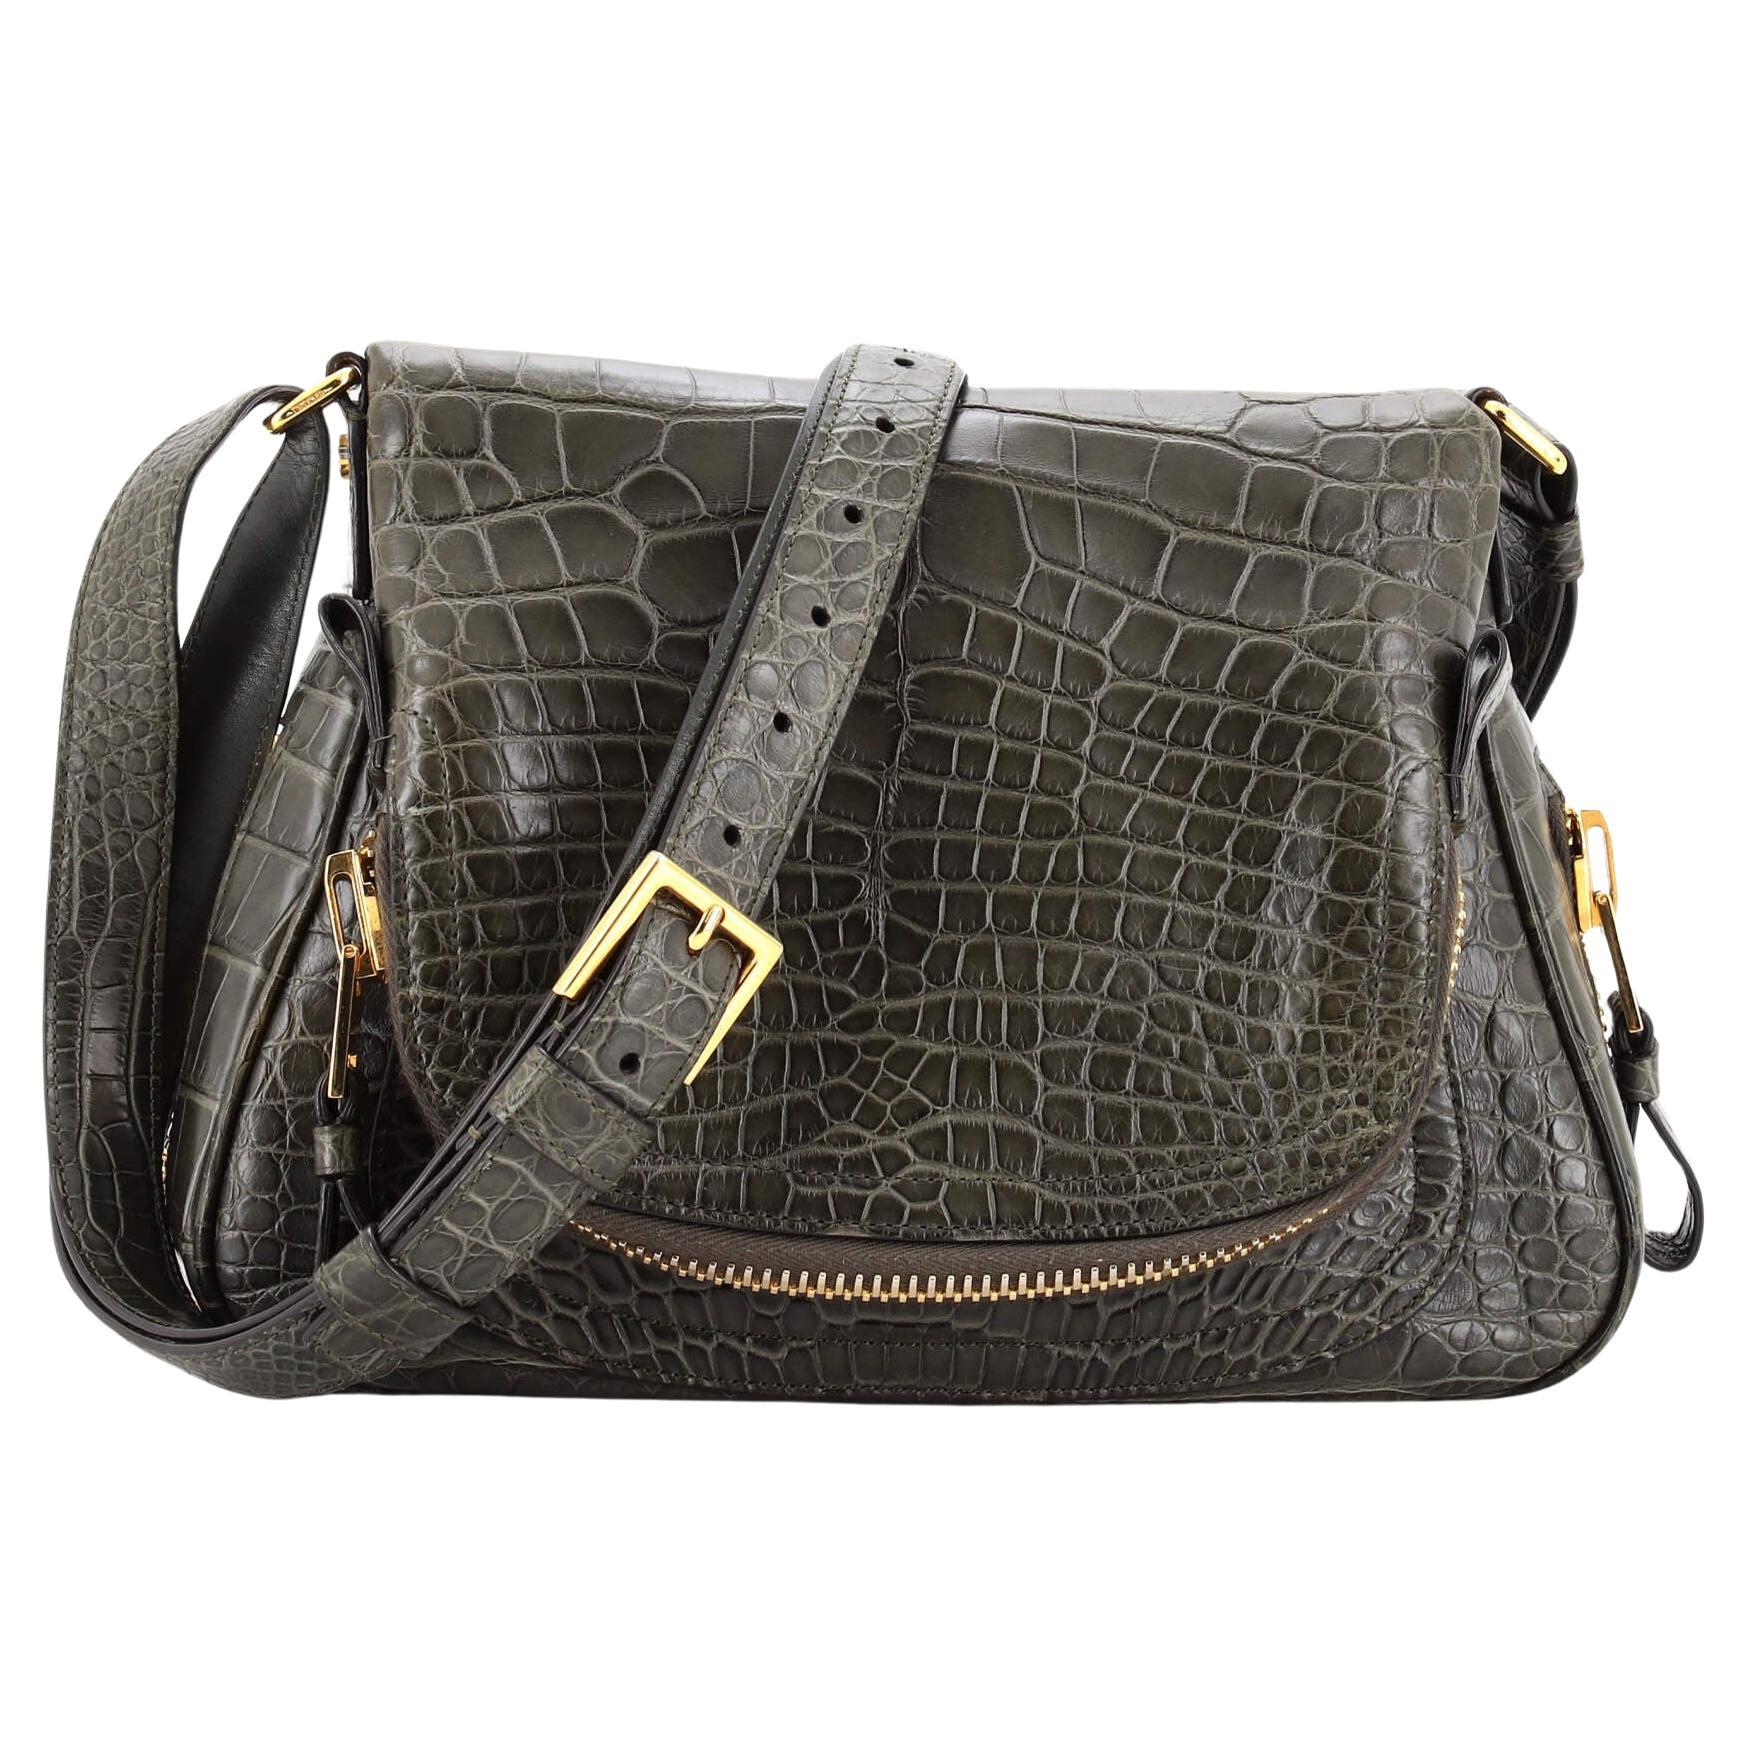 Hermes Birkin 30cm Bag Ostrich Leather Gray W/Gold Hardware $5255